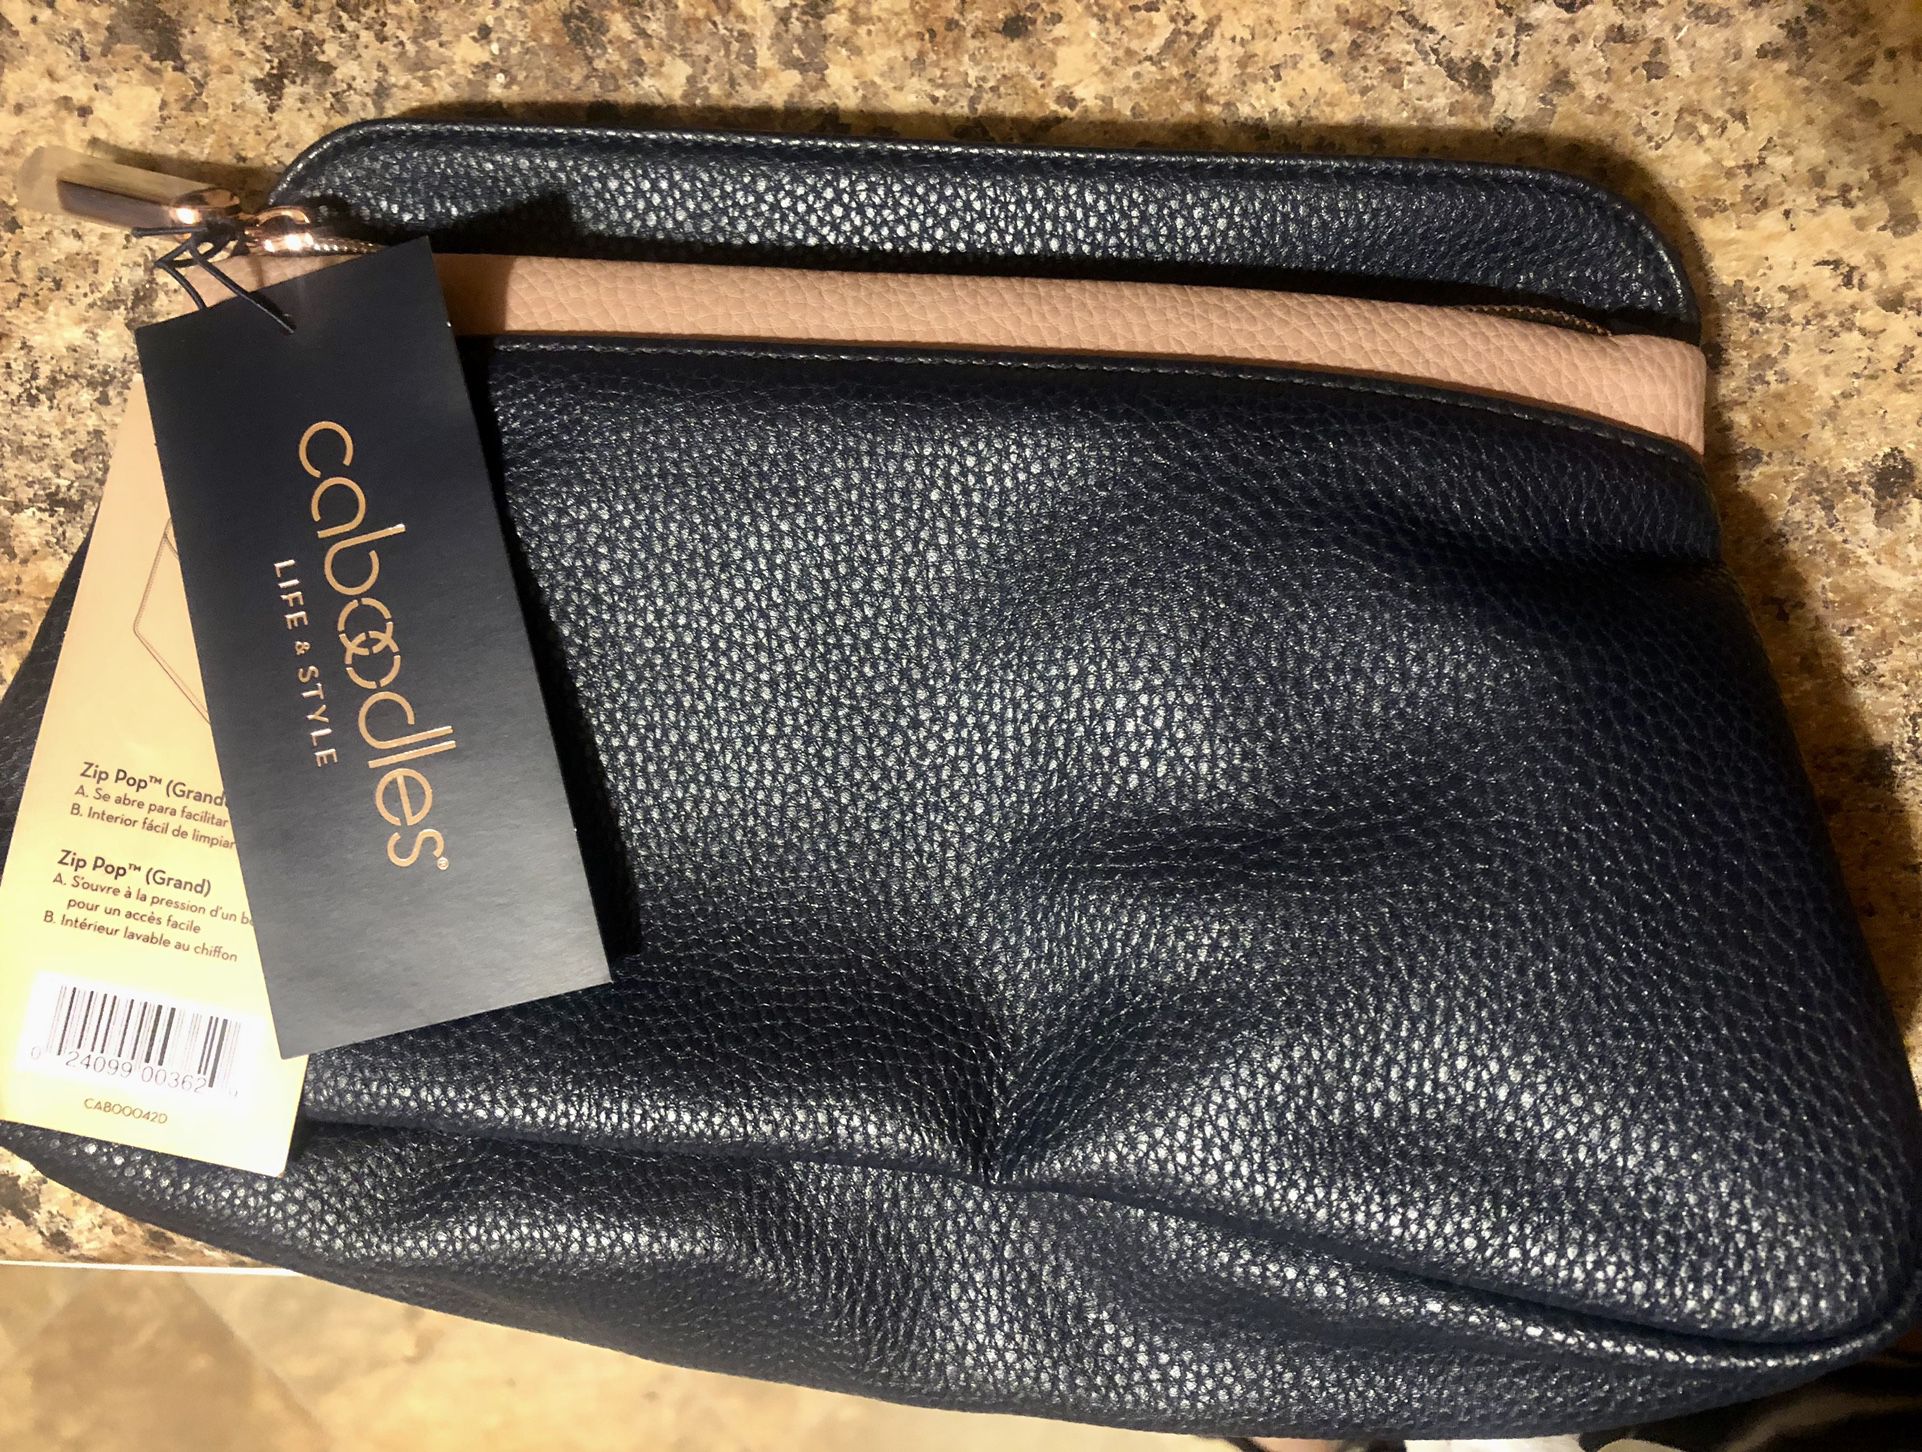 NEW - Caboodles Life & Style Zip Pop Large Makeup Bag